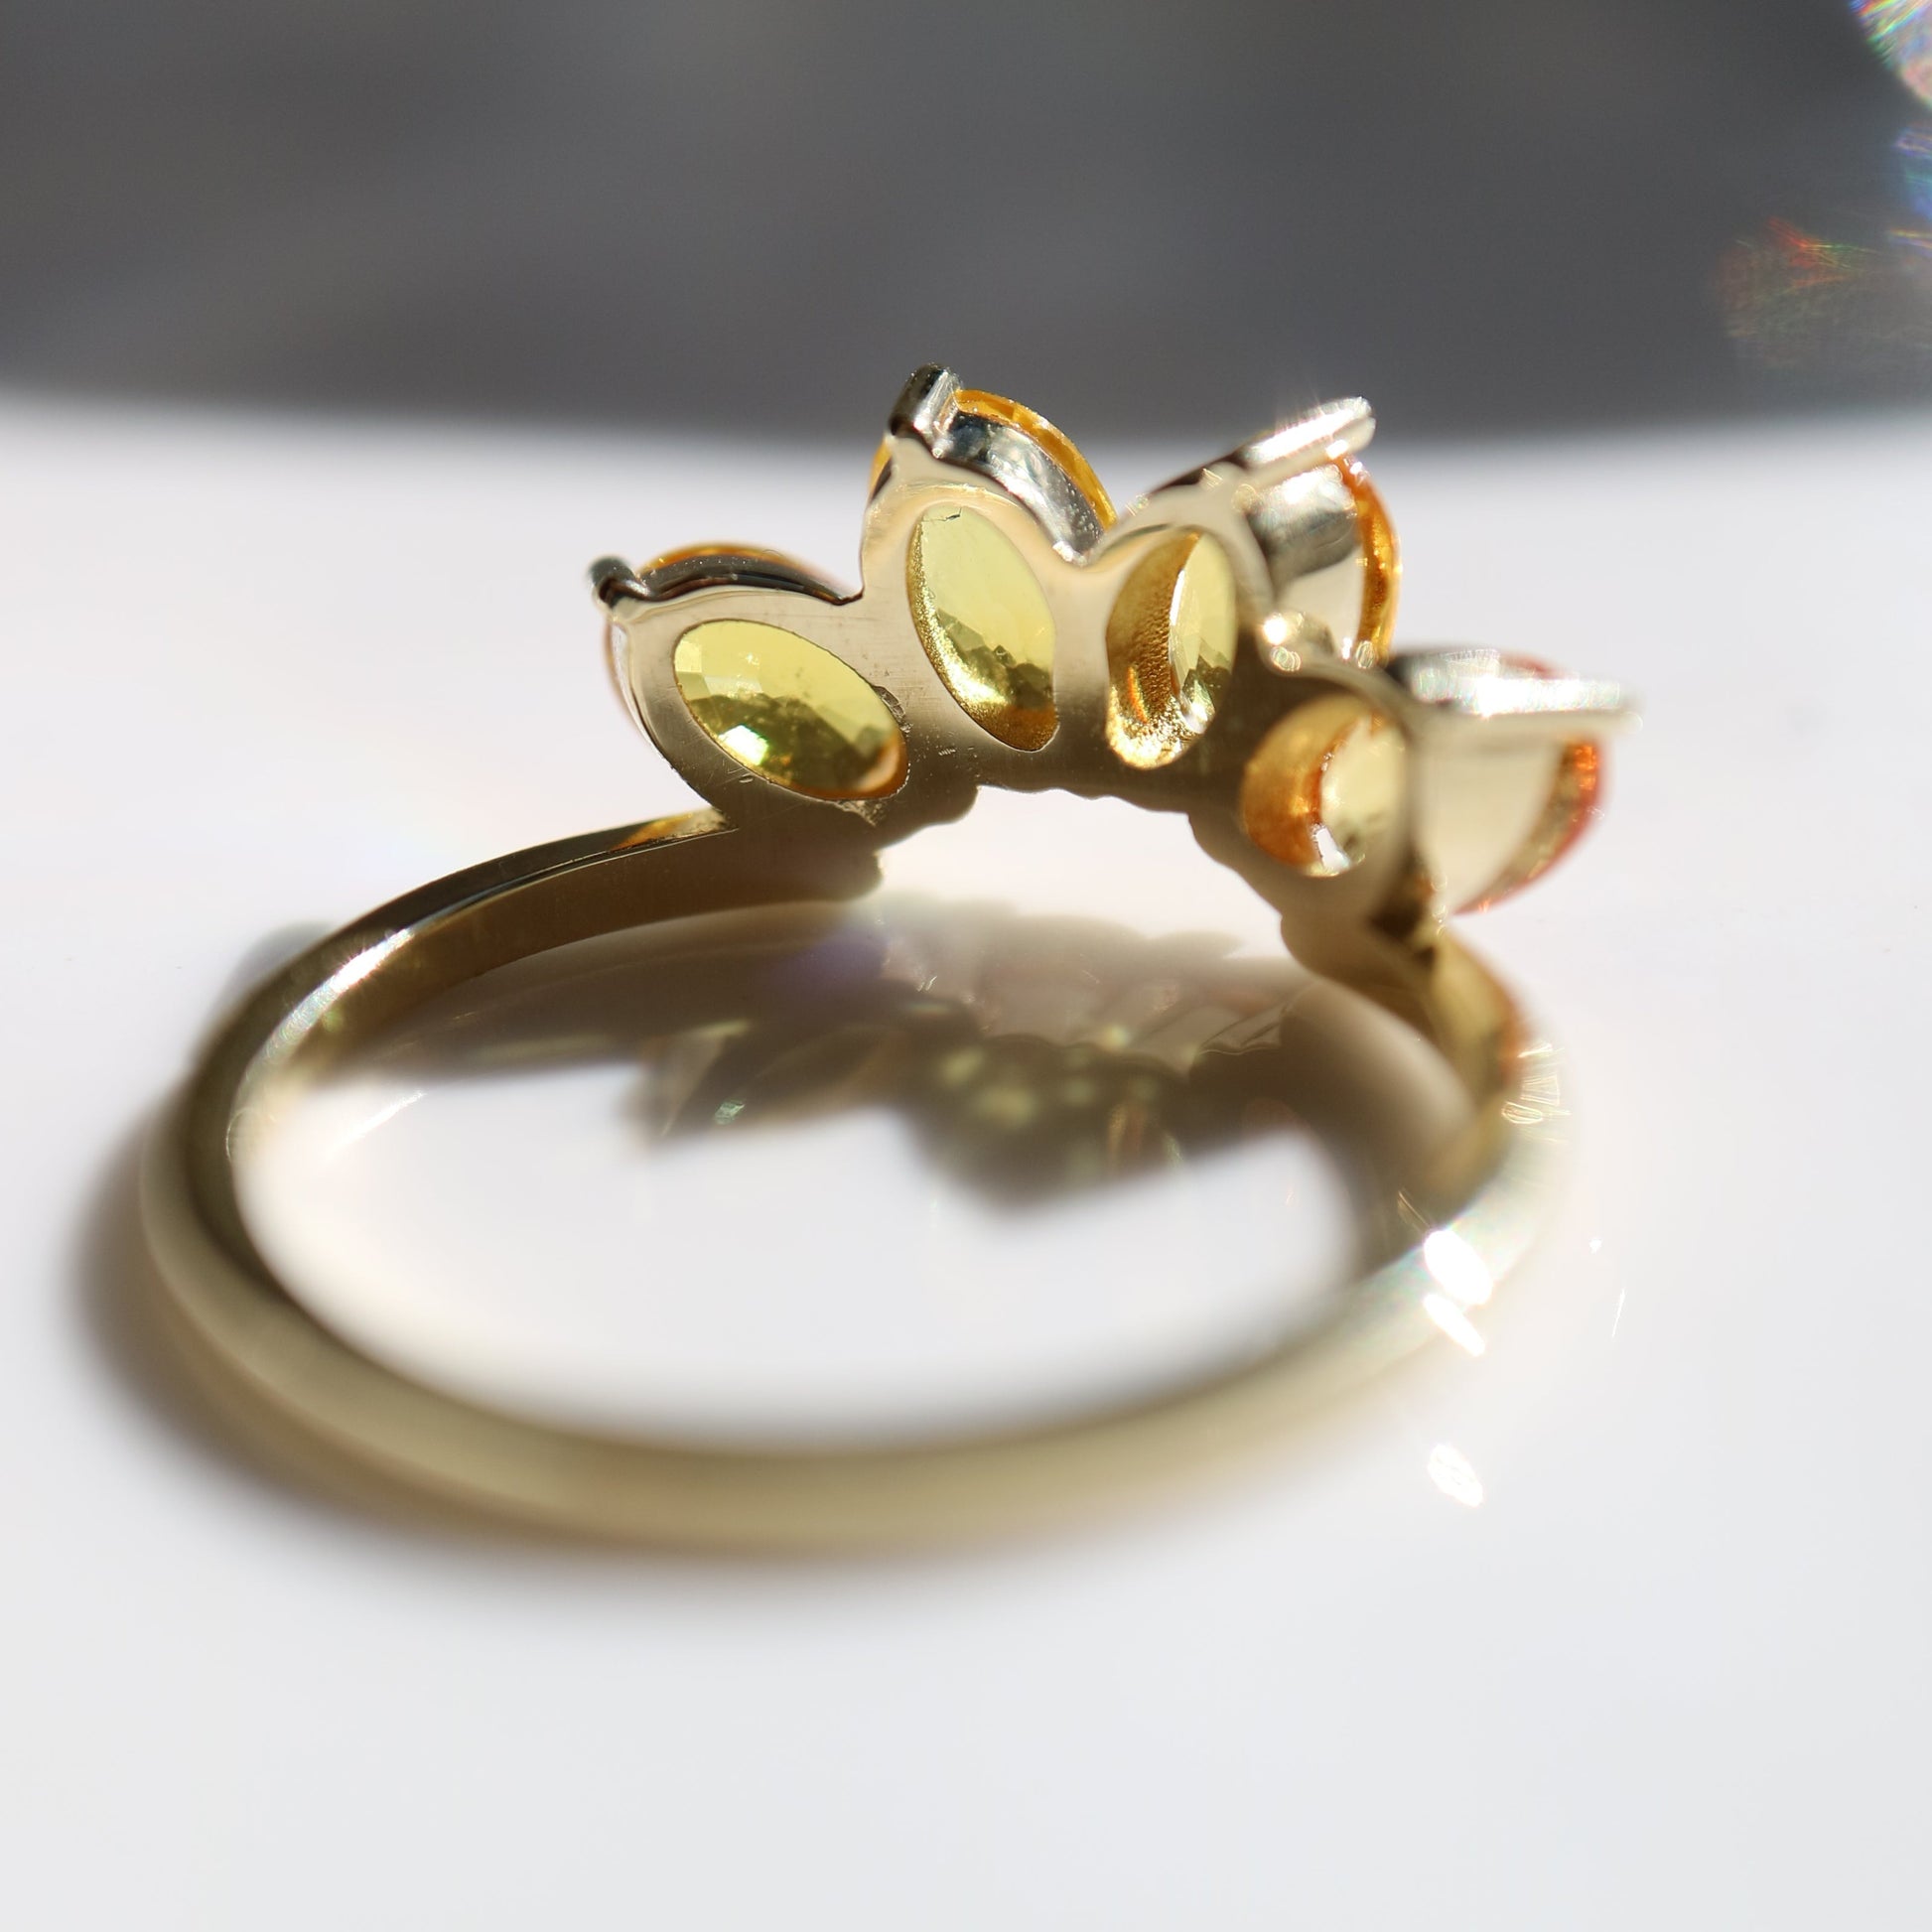 9ct gold Sunrise Ring with citrine gemstones